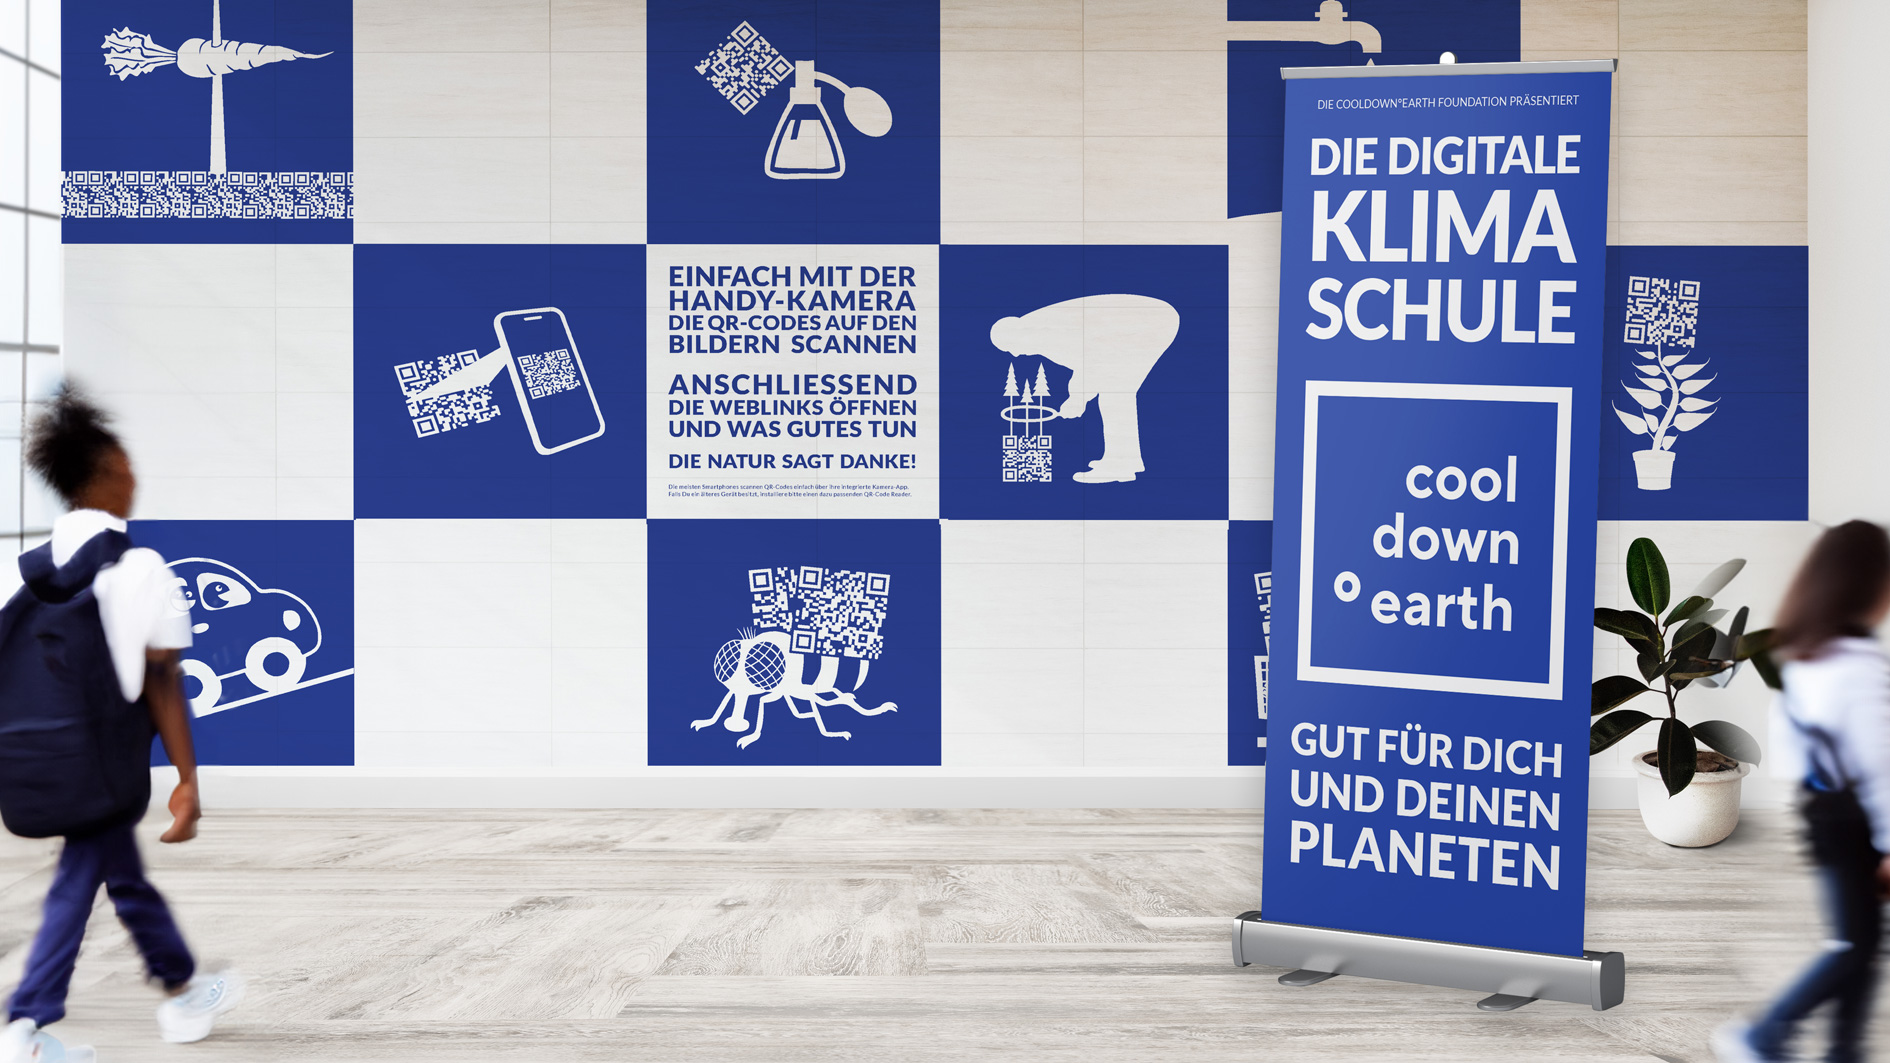 Digitale-Klimaschule_keyvisual3_indoor